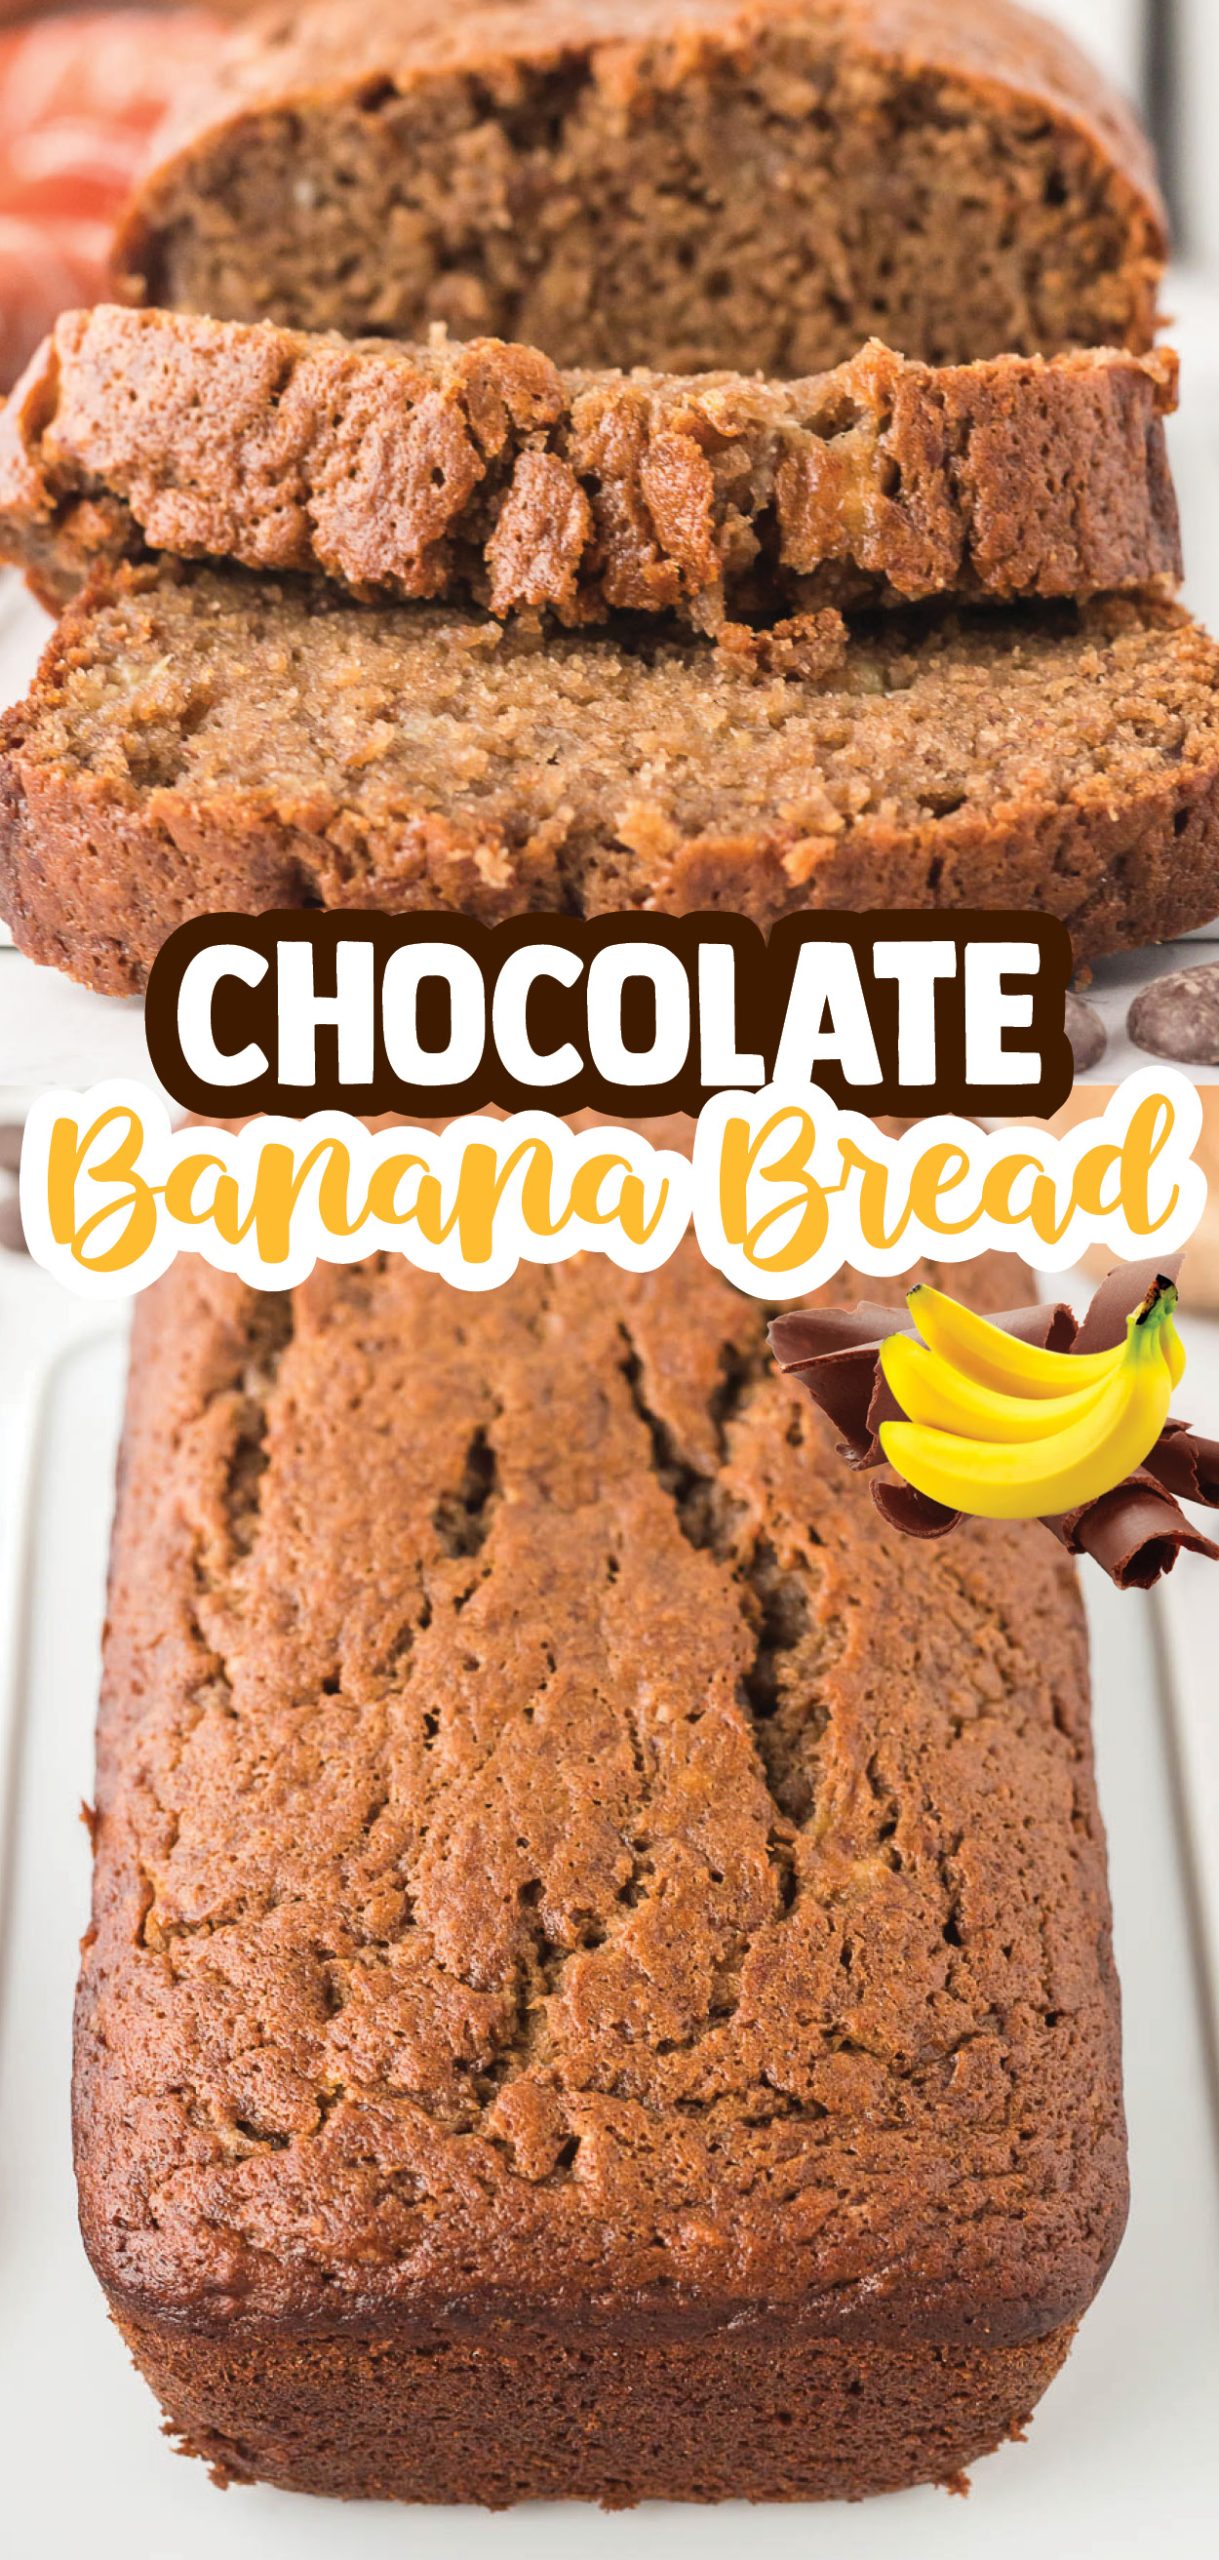 Move over ordinary banana bread, Chocolate Banana Bread is next up on the menu!